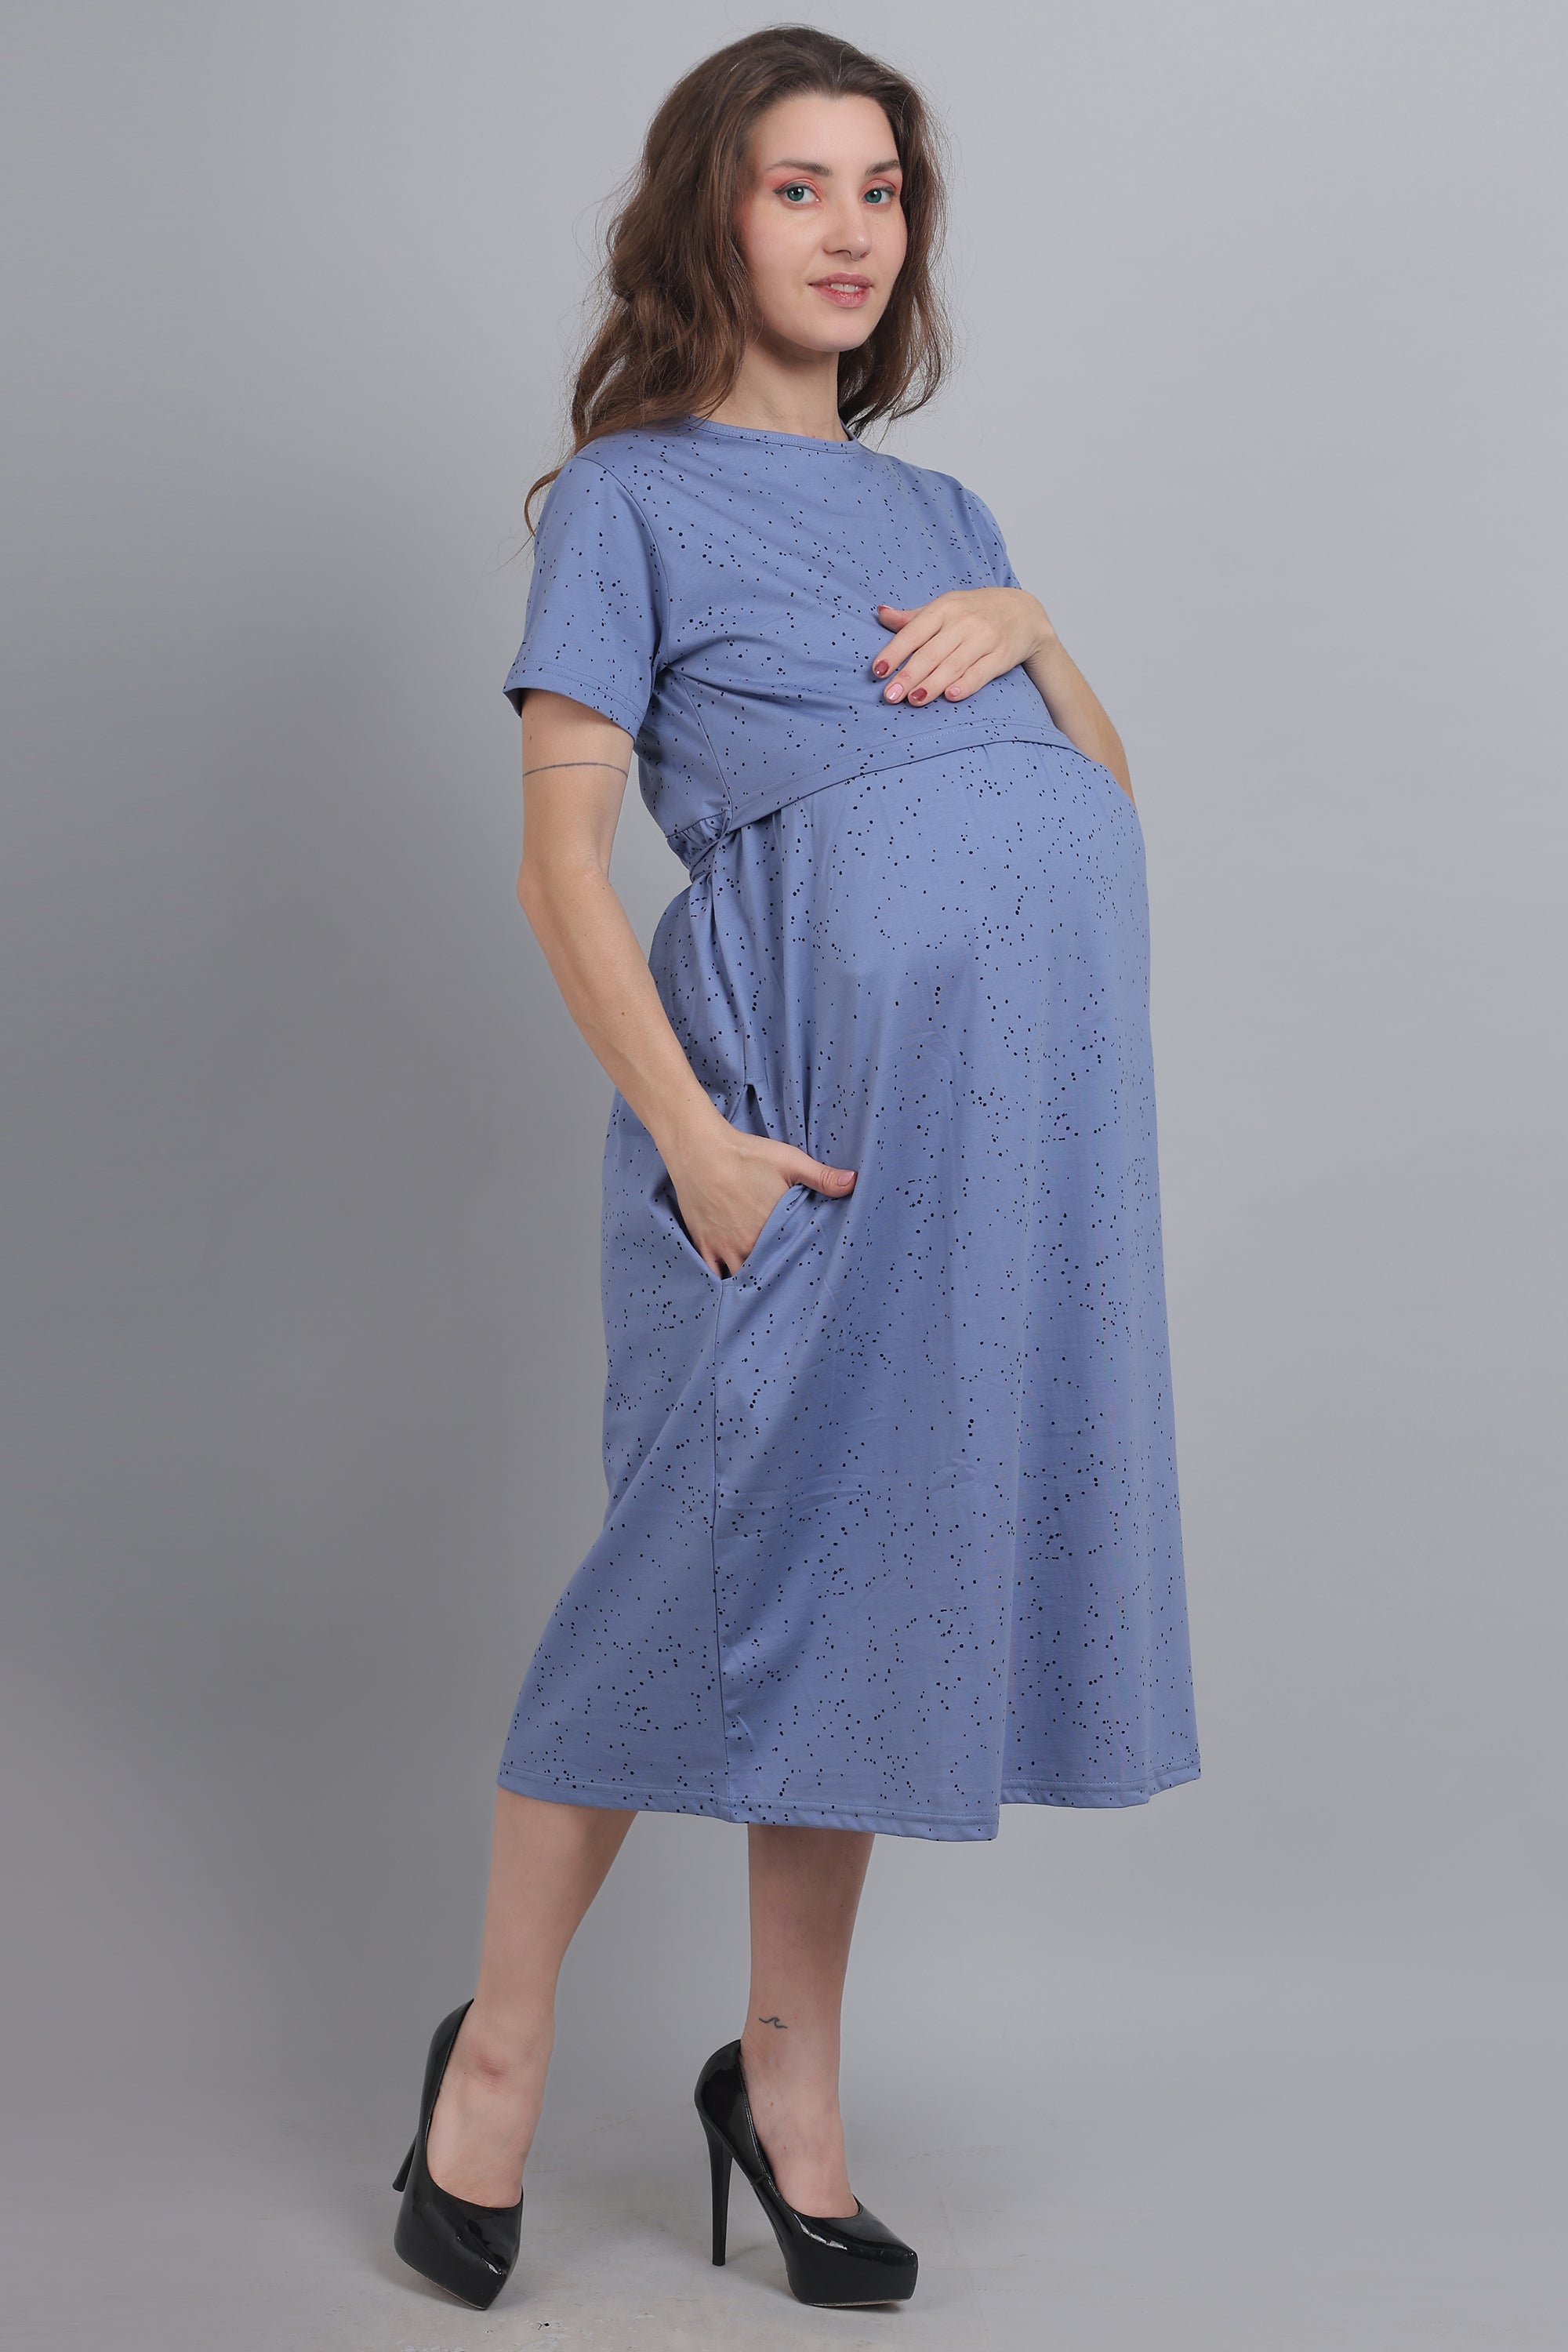 Slate Blue Knitted Cotton Maternity Loungewear Dress